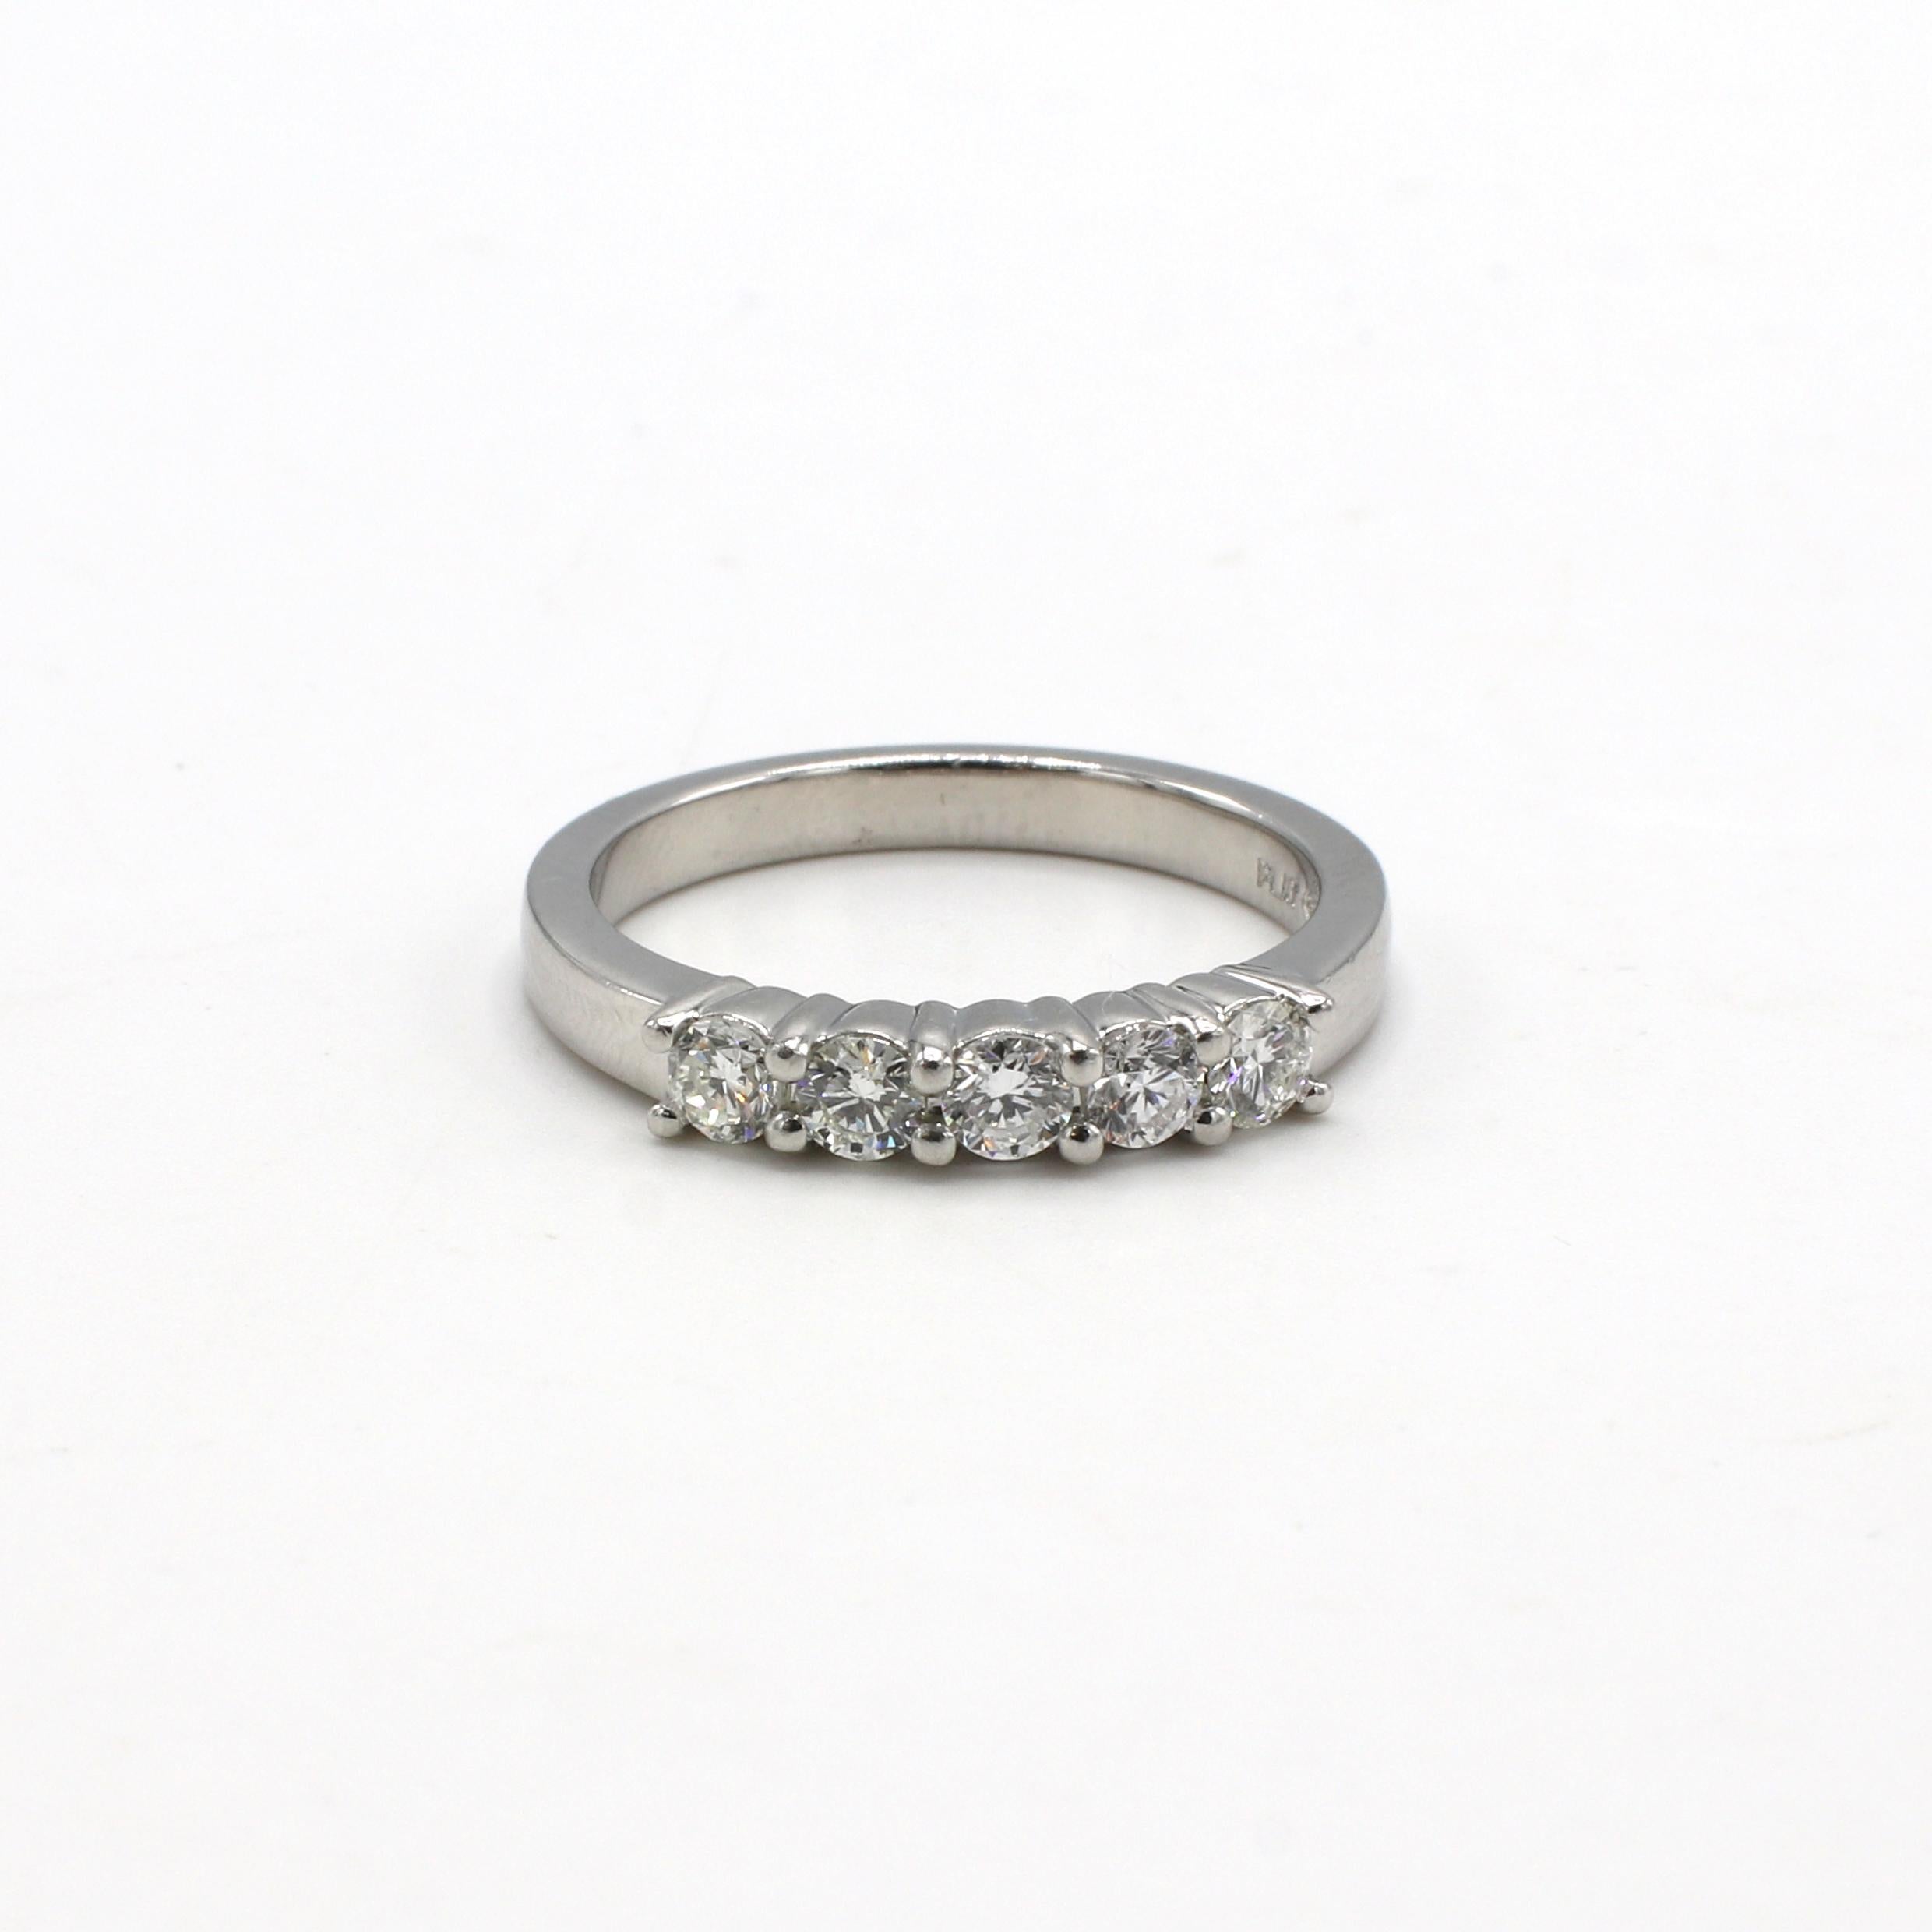 Platinum .50 Carat 5 Stone Diamond Wedding Band Ring 
Metal: Platinum
Weight: 5.73 grams
Diamonds: Approx. .50 CTW round G-H VS diamonds
Size: 7 (US)
Width: 2.5mm
